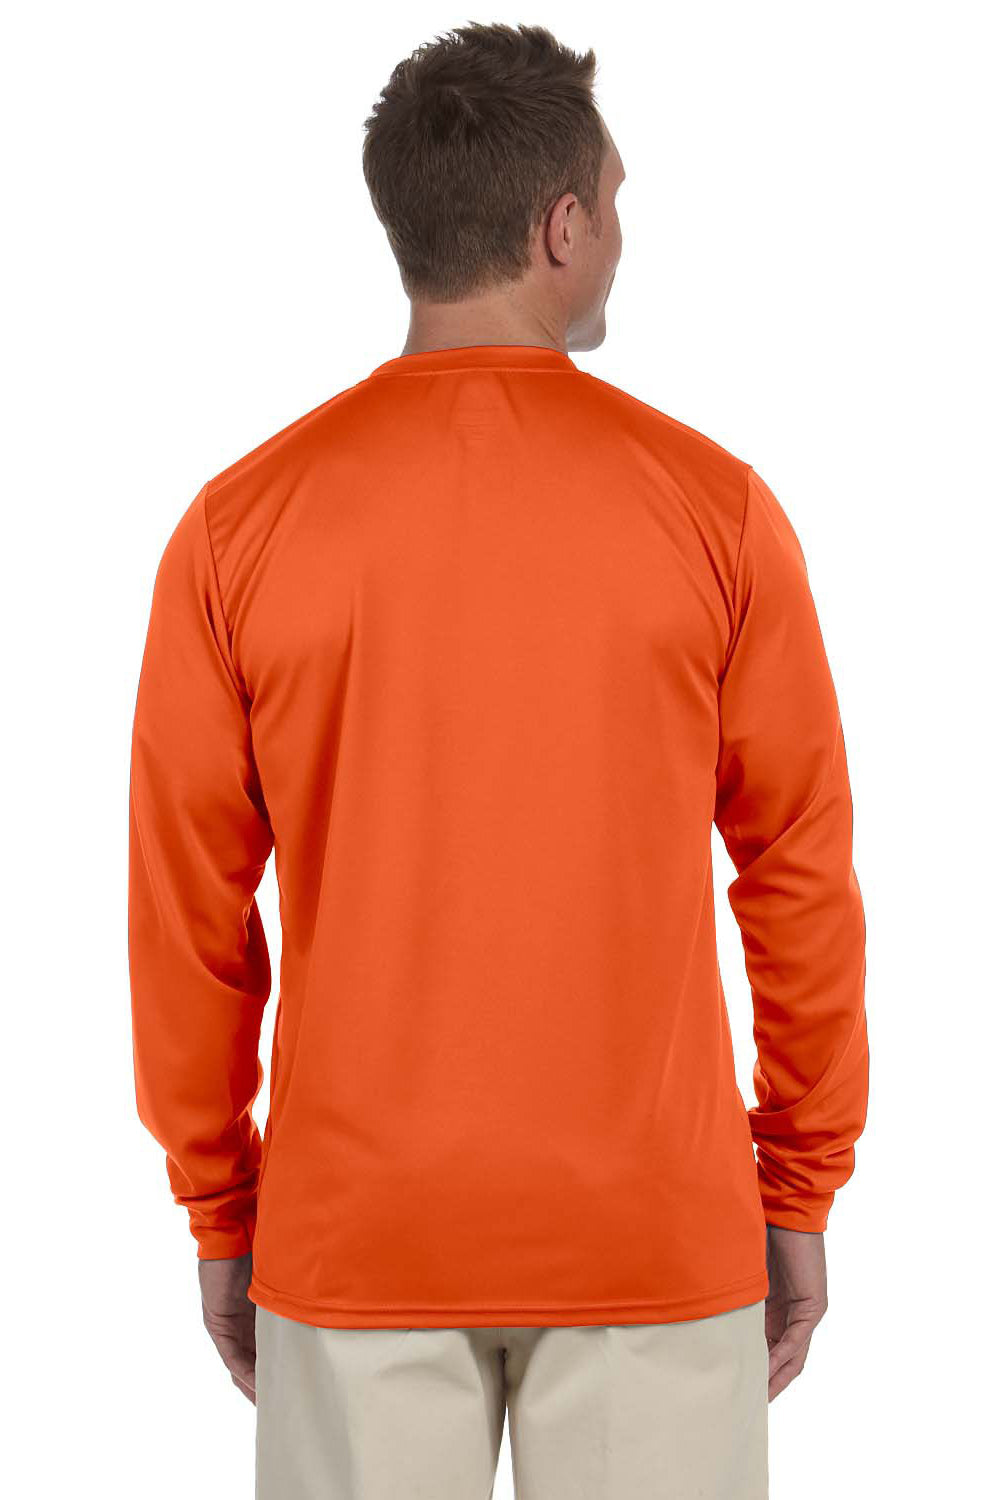 Augusta Sportswear 788 Mens Moisture Wicking Long Sleeve Crewneck T-Shirt Orange Model Back